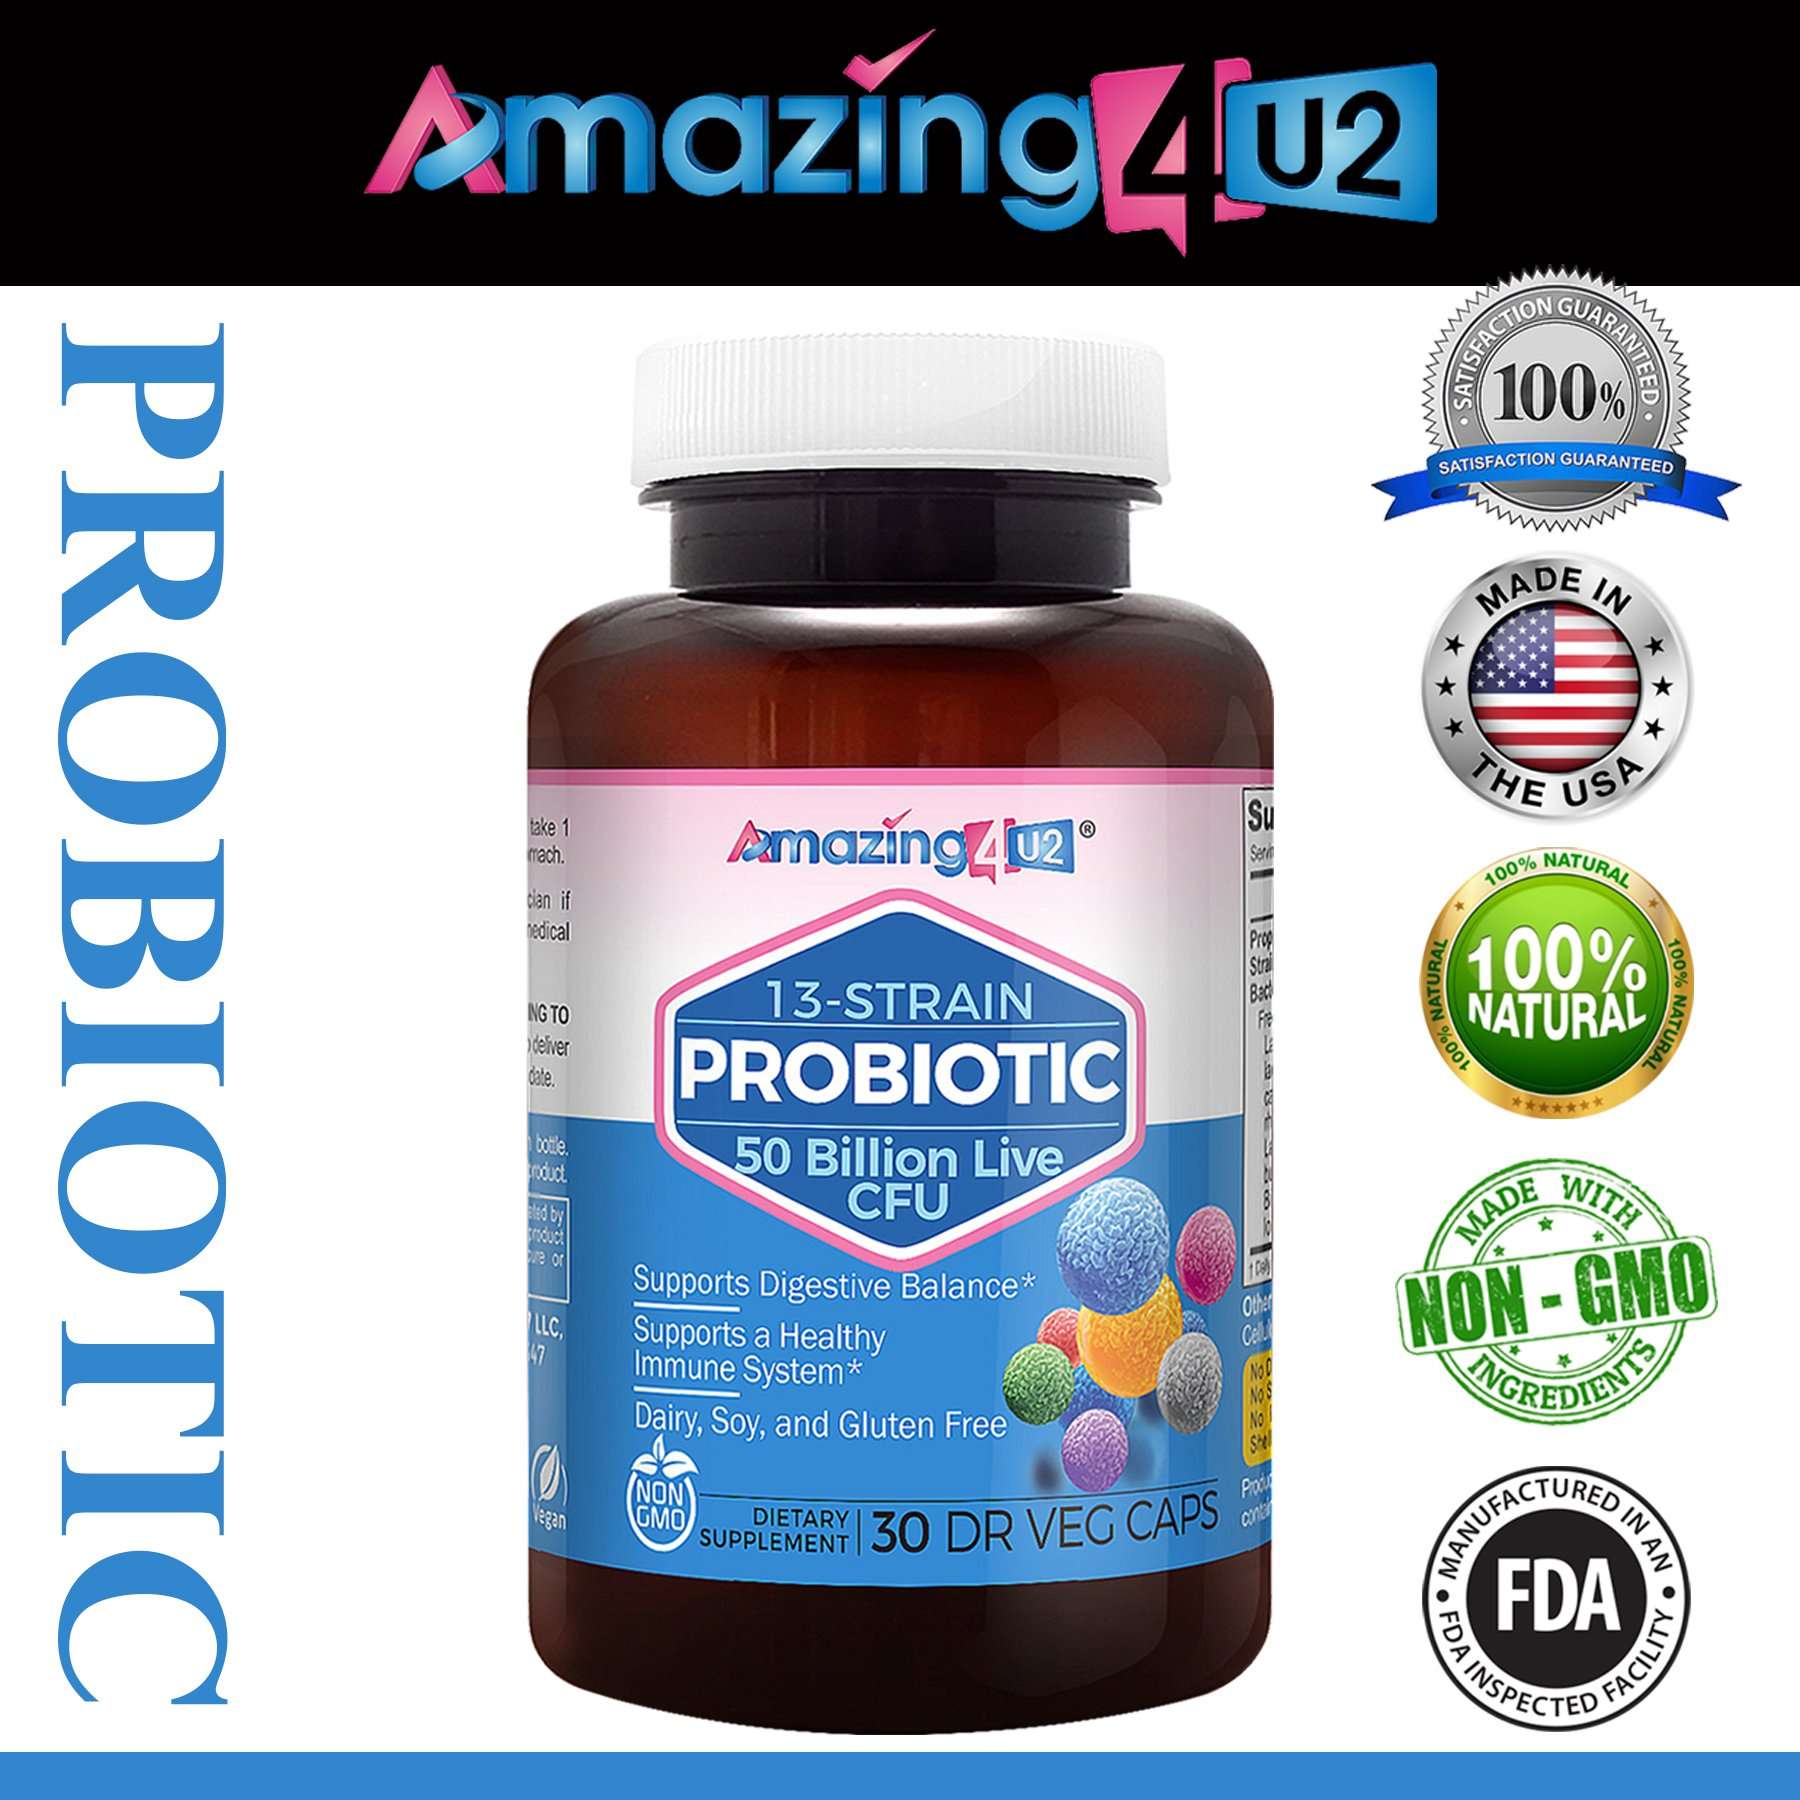 Amazing 4U2 Probiotics 50